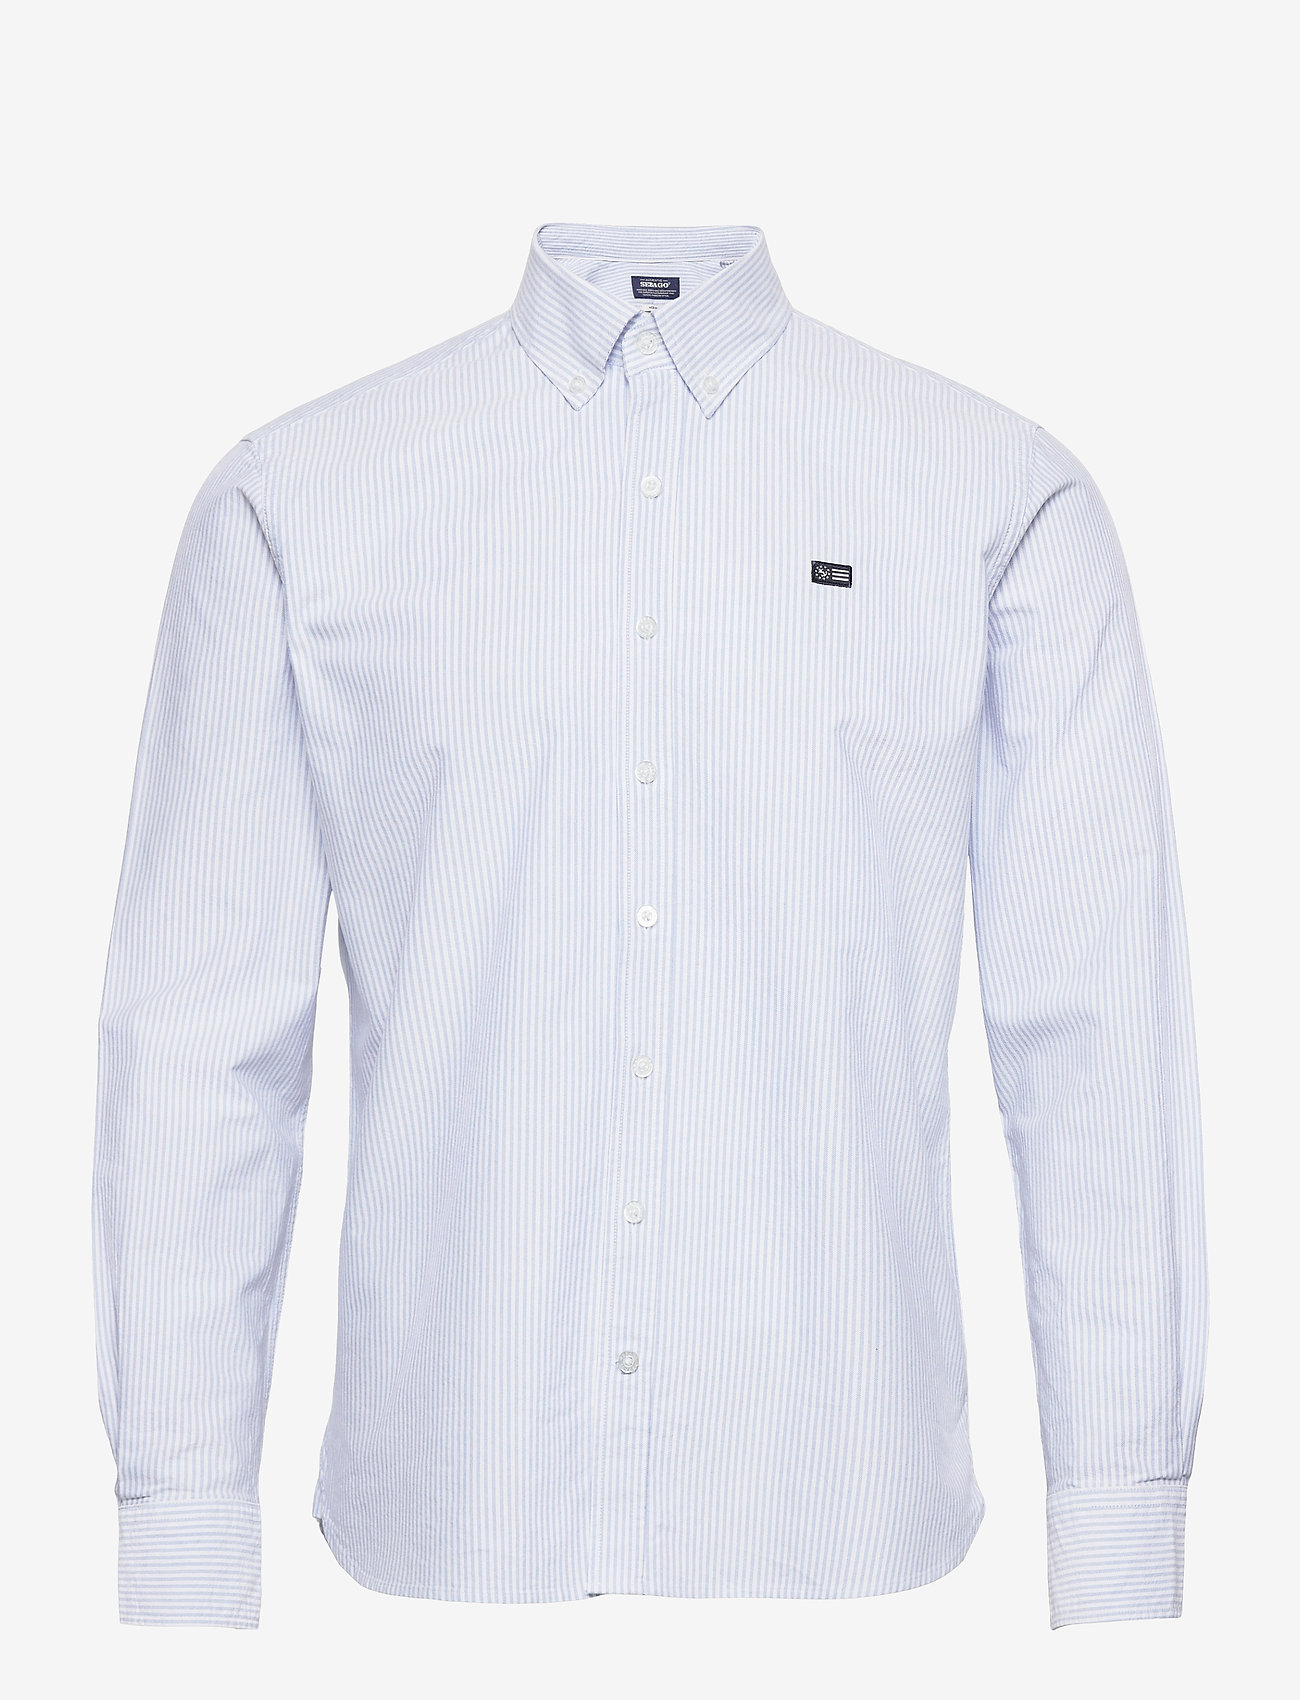 Sebago - Oxford Stripe Shirt B.D. - light blue/white - 0